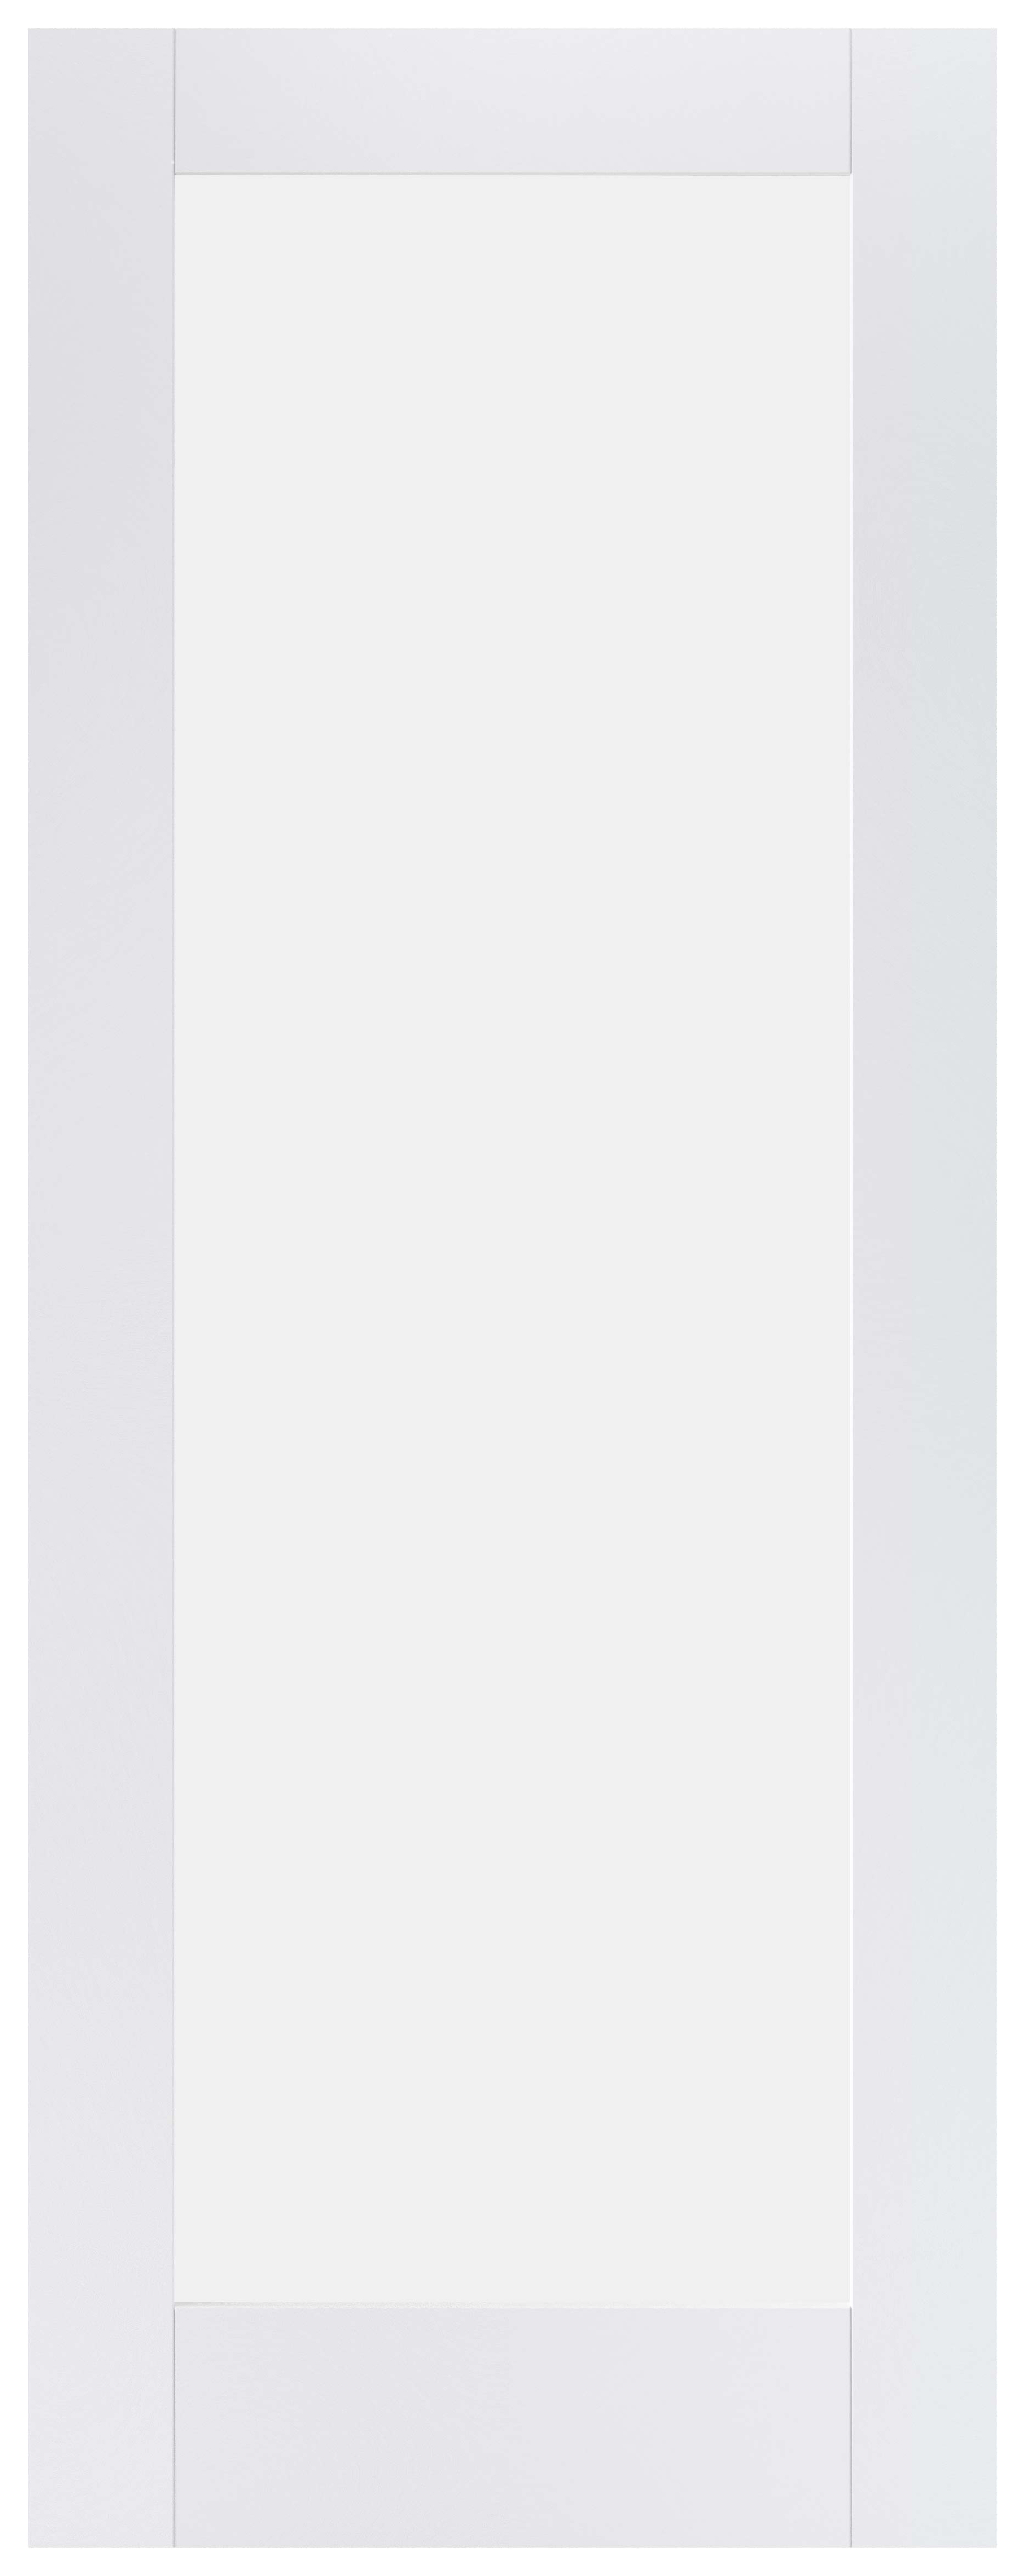 Image of LPD Internal 1 Lite Pattern 10 Primed White Solid Core Door 813 x 2032mm